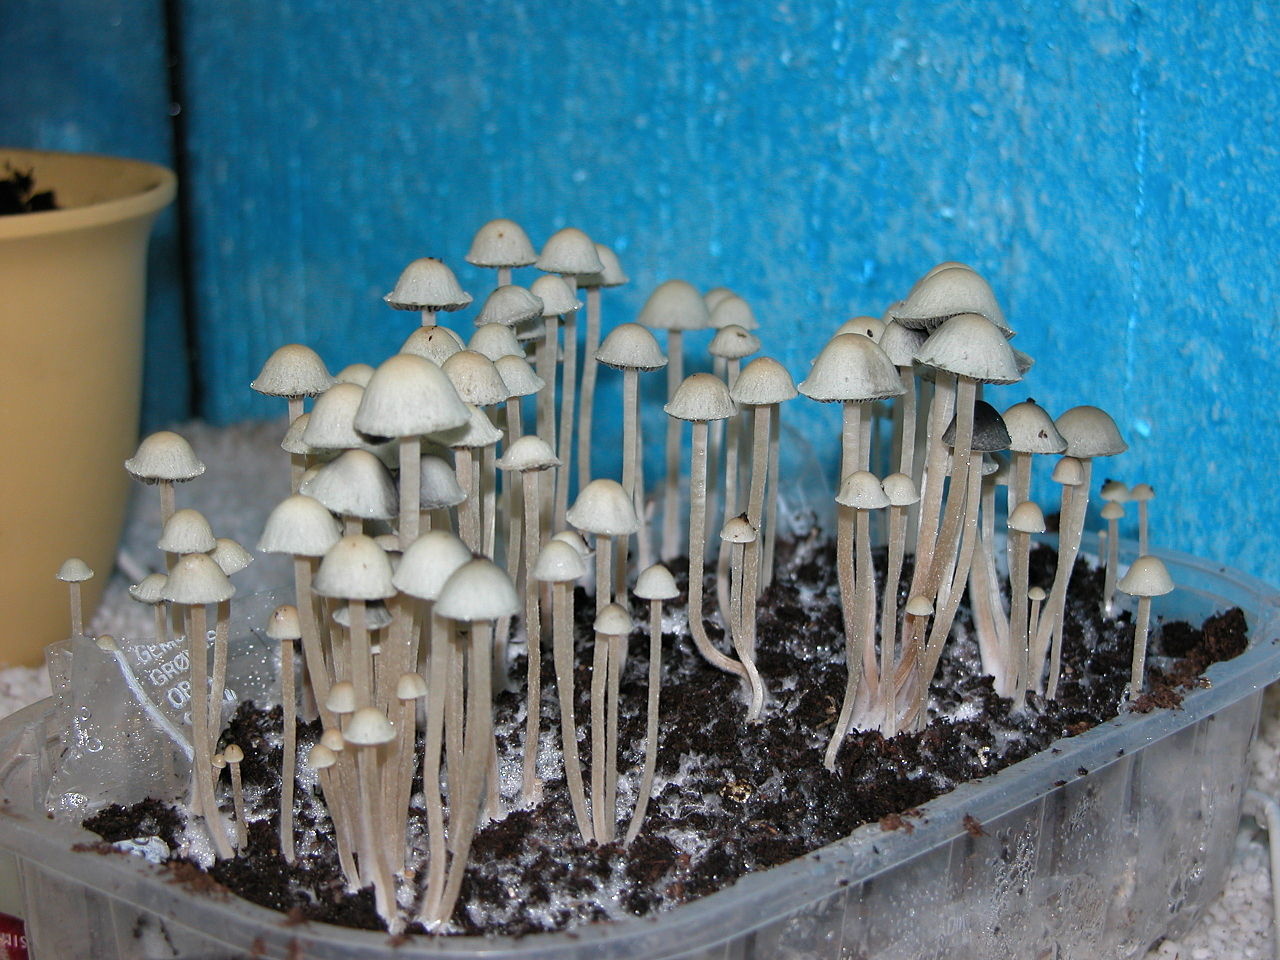 Instructions D'Utilisation Des Kits de Culture Fresh Mushrooms - Zamnesia